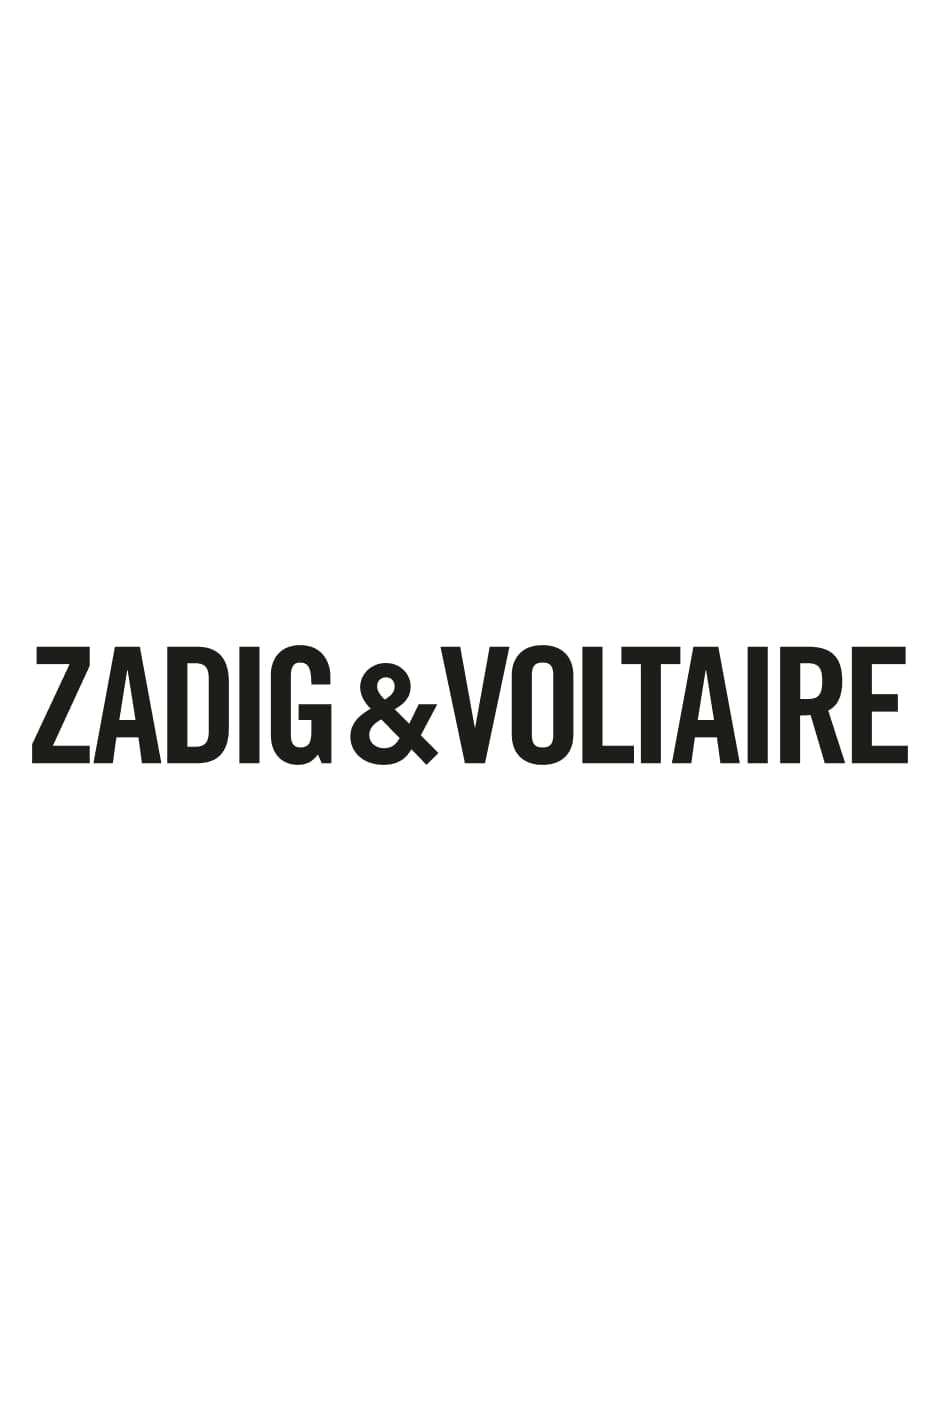 Georgy Diamanté Photo Print Hoodie Women’s Zadig&Voltaire marl grey hoodie with Blue Car photo print and Zadig diamanté Happy Face on the back.